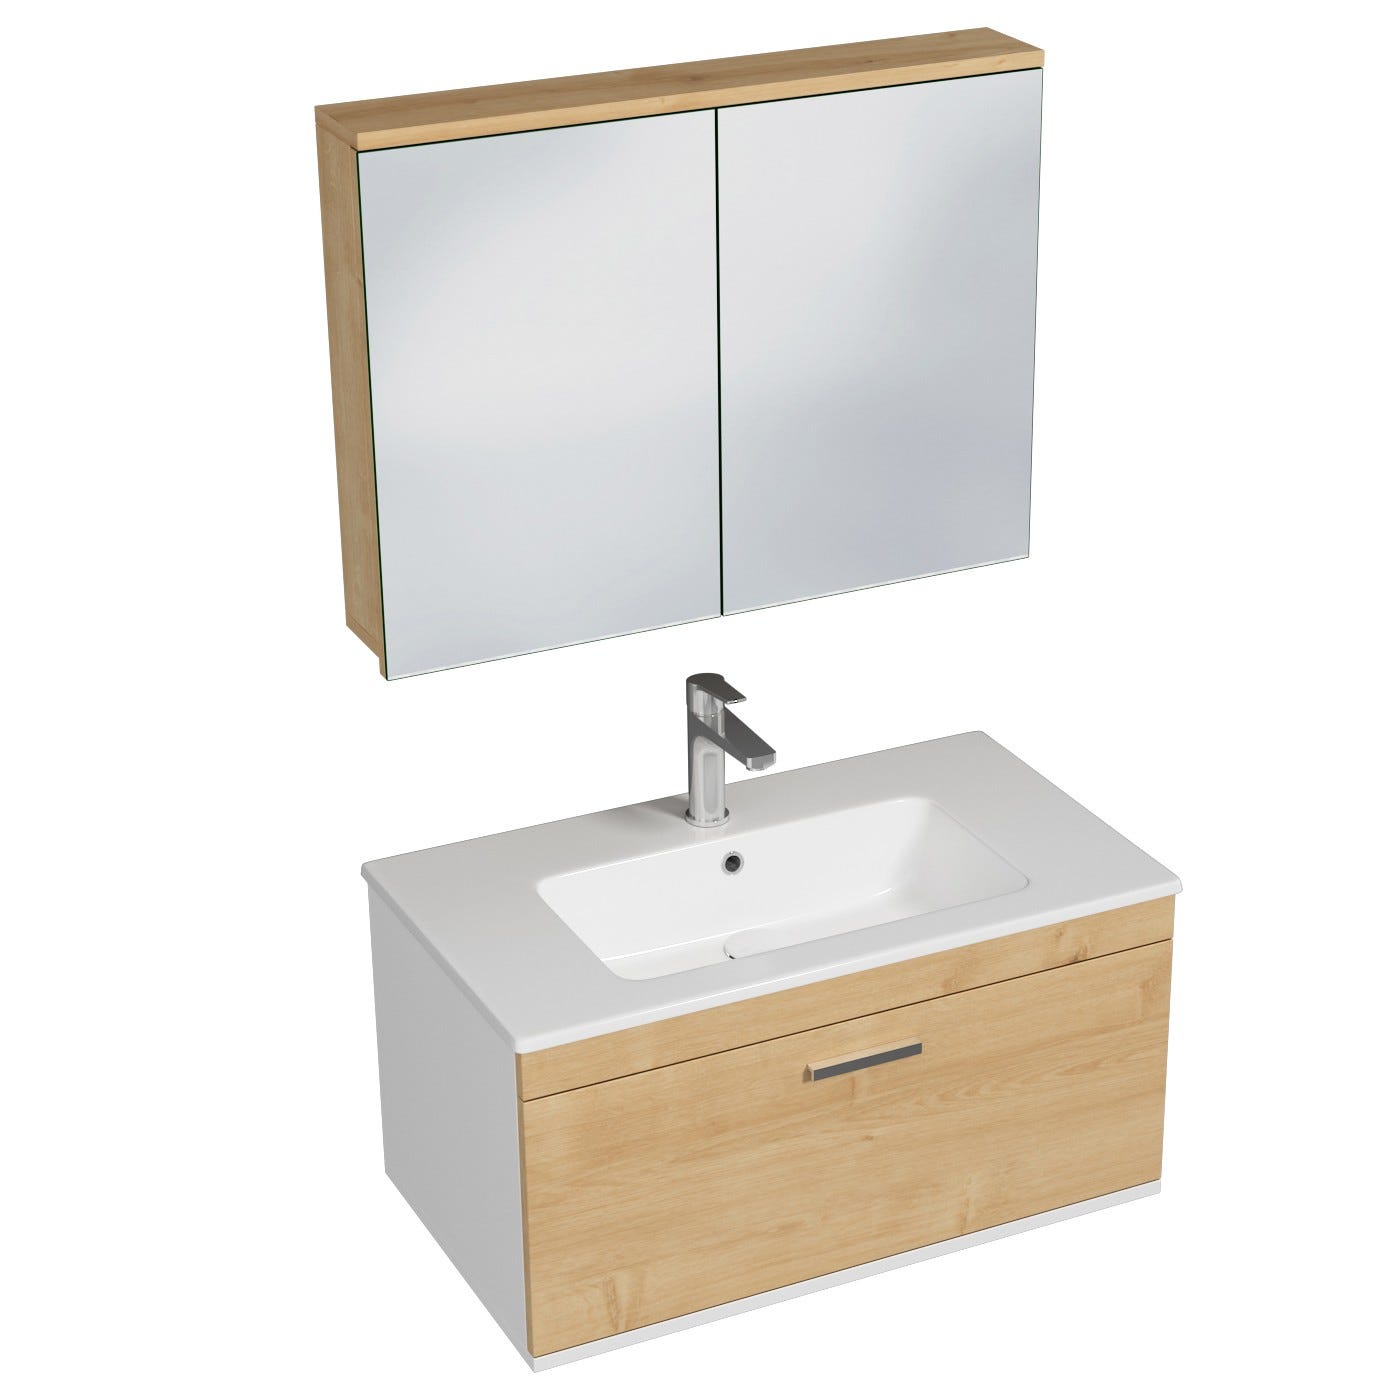 RUBITE Meuble salle de bain simple vasque 1 tiroir chêne clair largeur 80 cm + miroir armoire 0